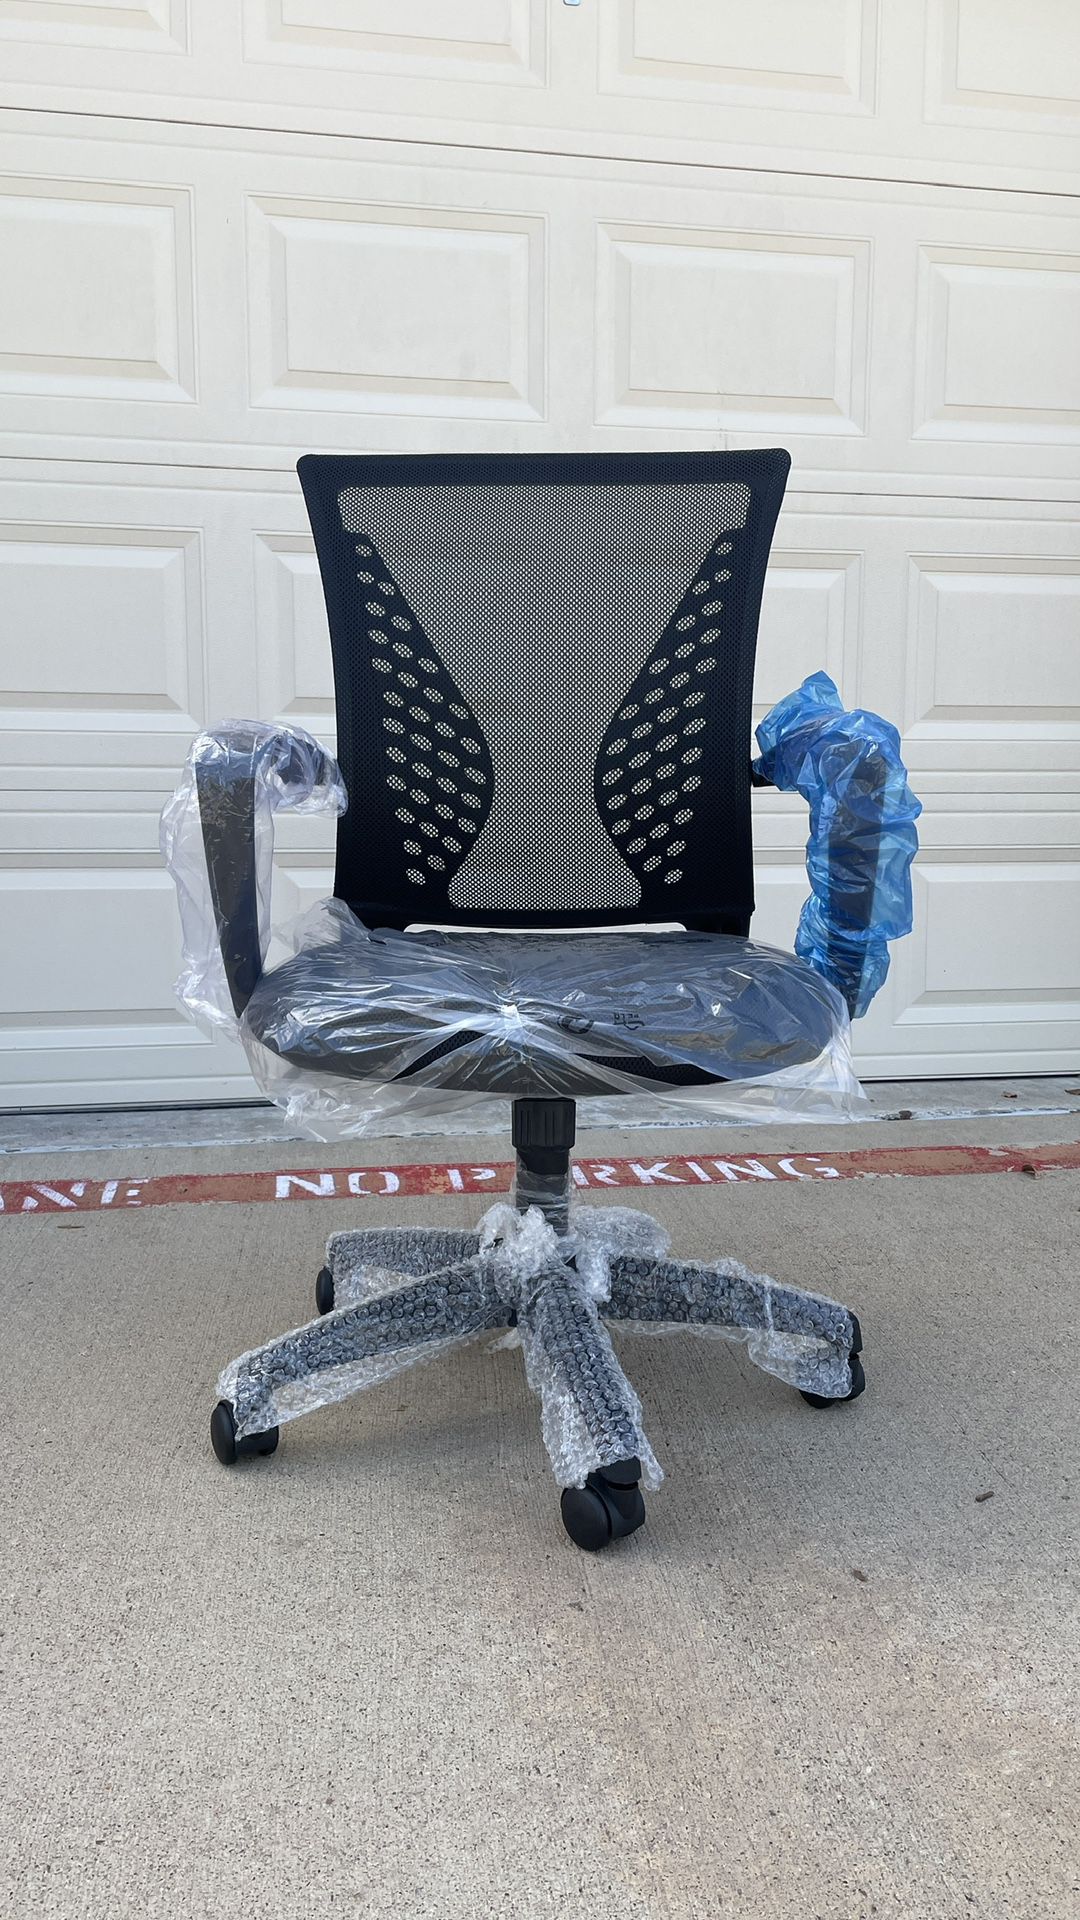 Brand New Ergonomic Office Chair 